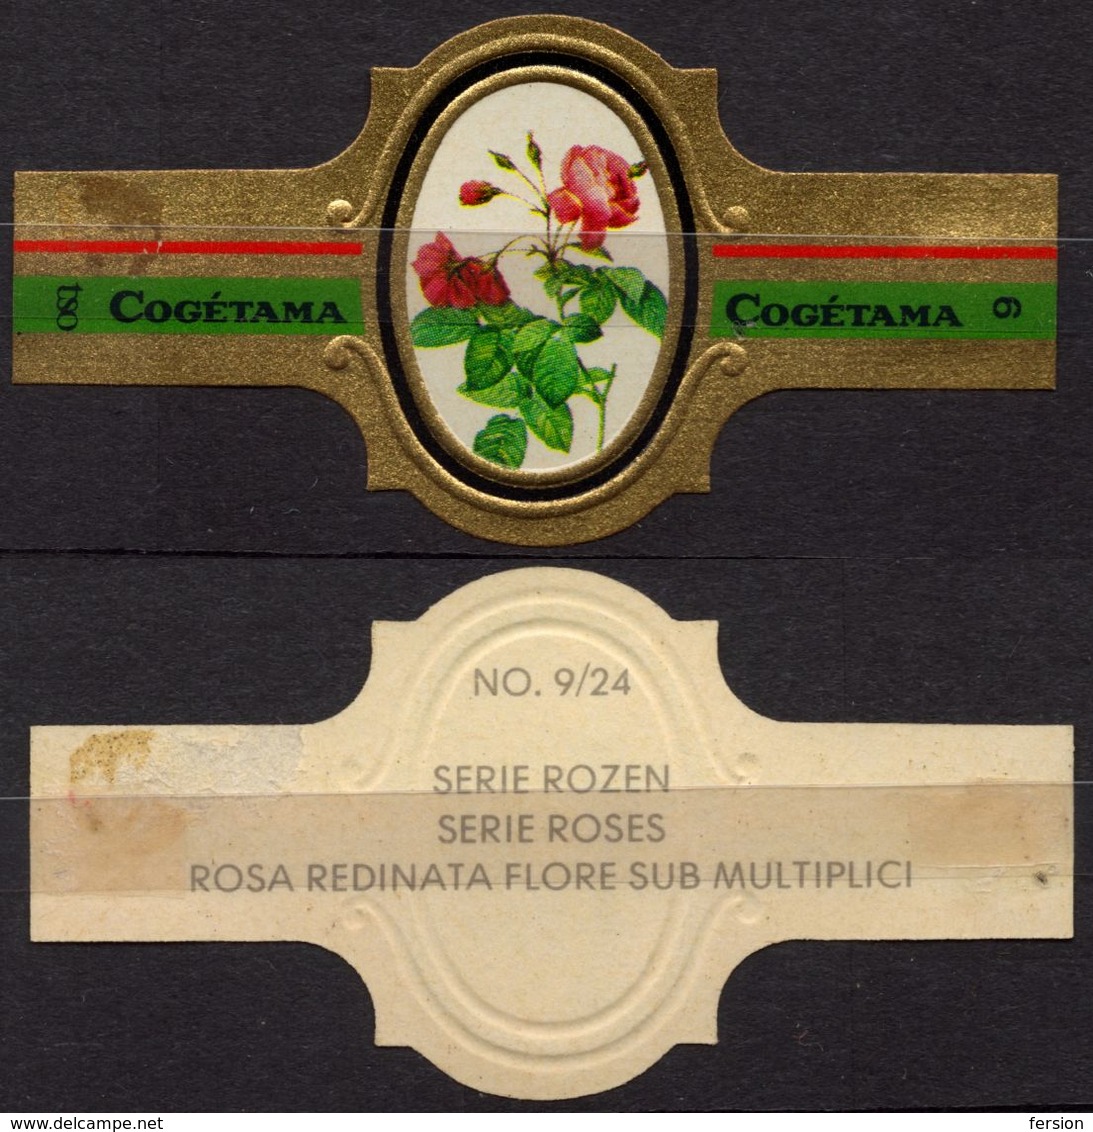 Redinata Flore Sub Multiplici - ROSE ROSES - Netherlands Holland / Cogétama / CIGAR CIGARS Label Vignette - Etiketten